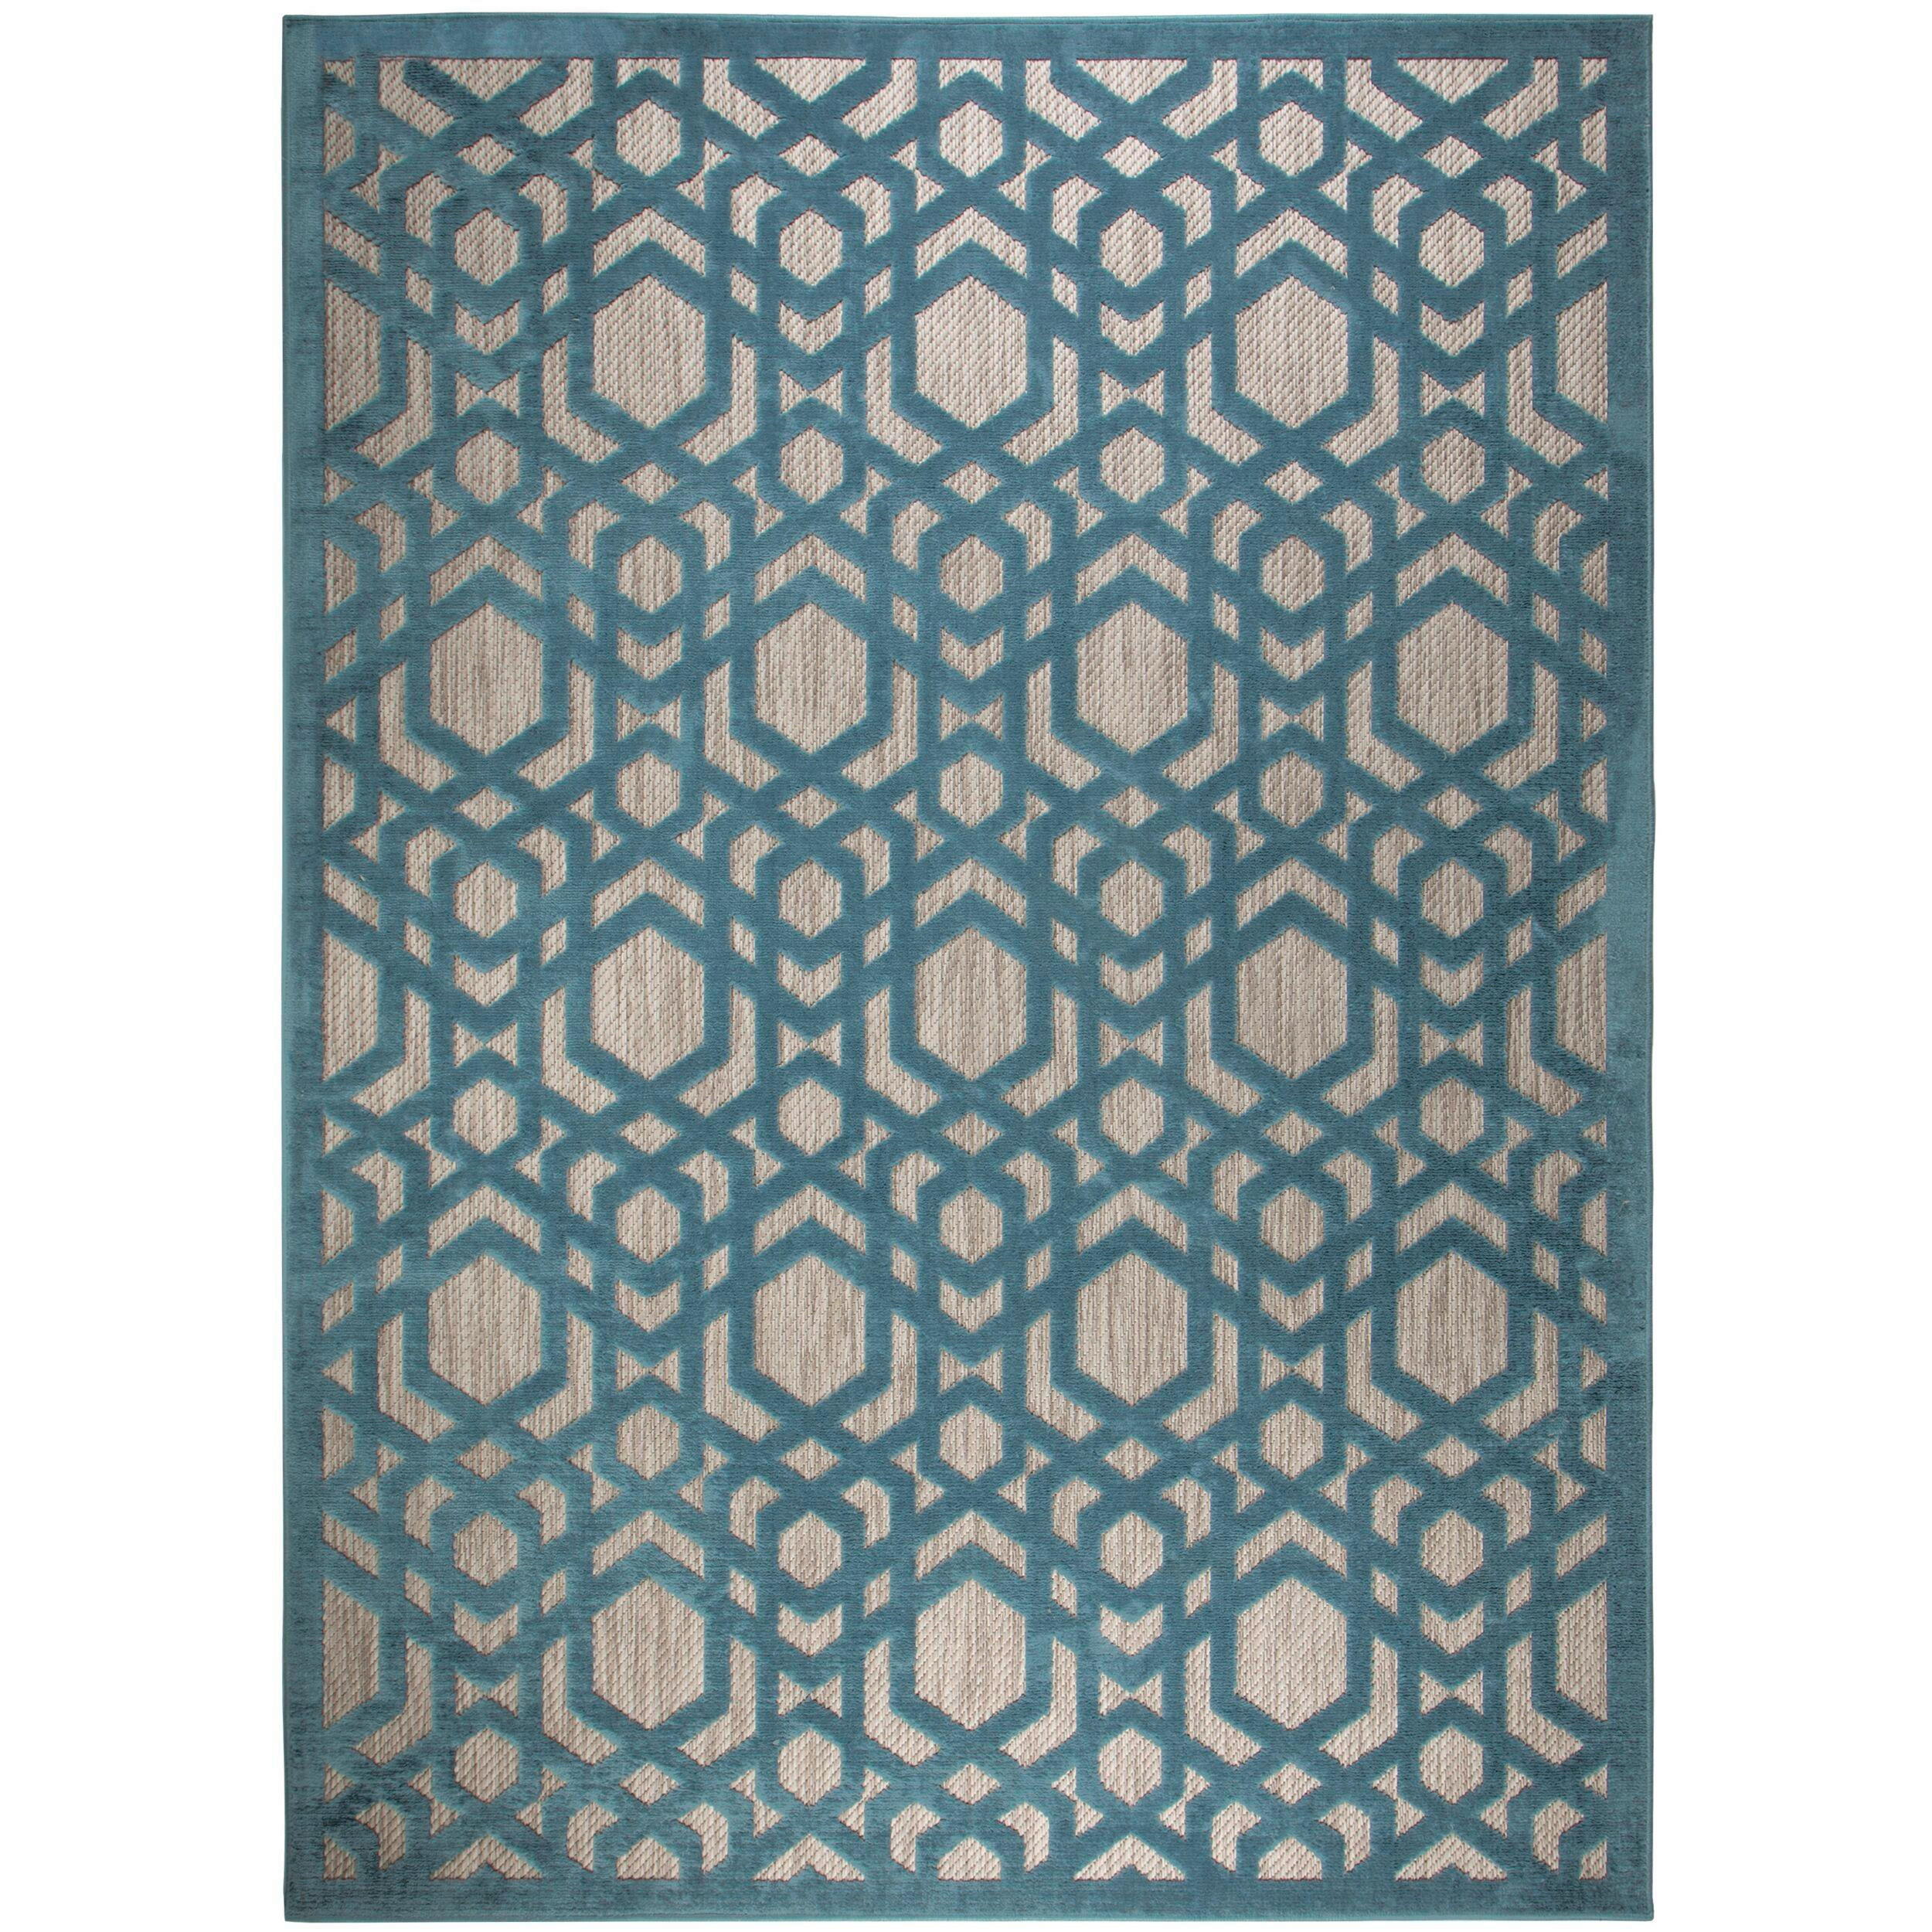 VENKOVNÍ KOBEREC, 160/230 cm, modrá - modrá - textil